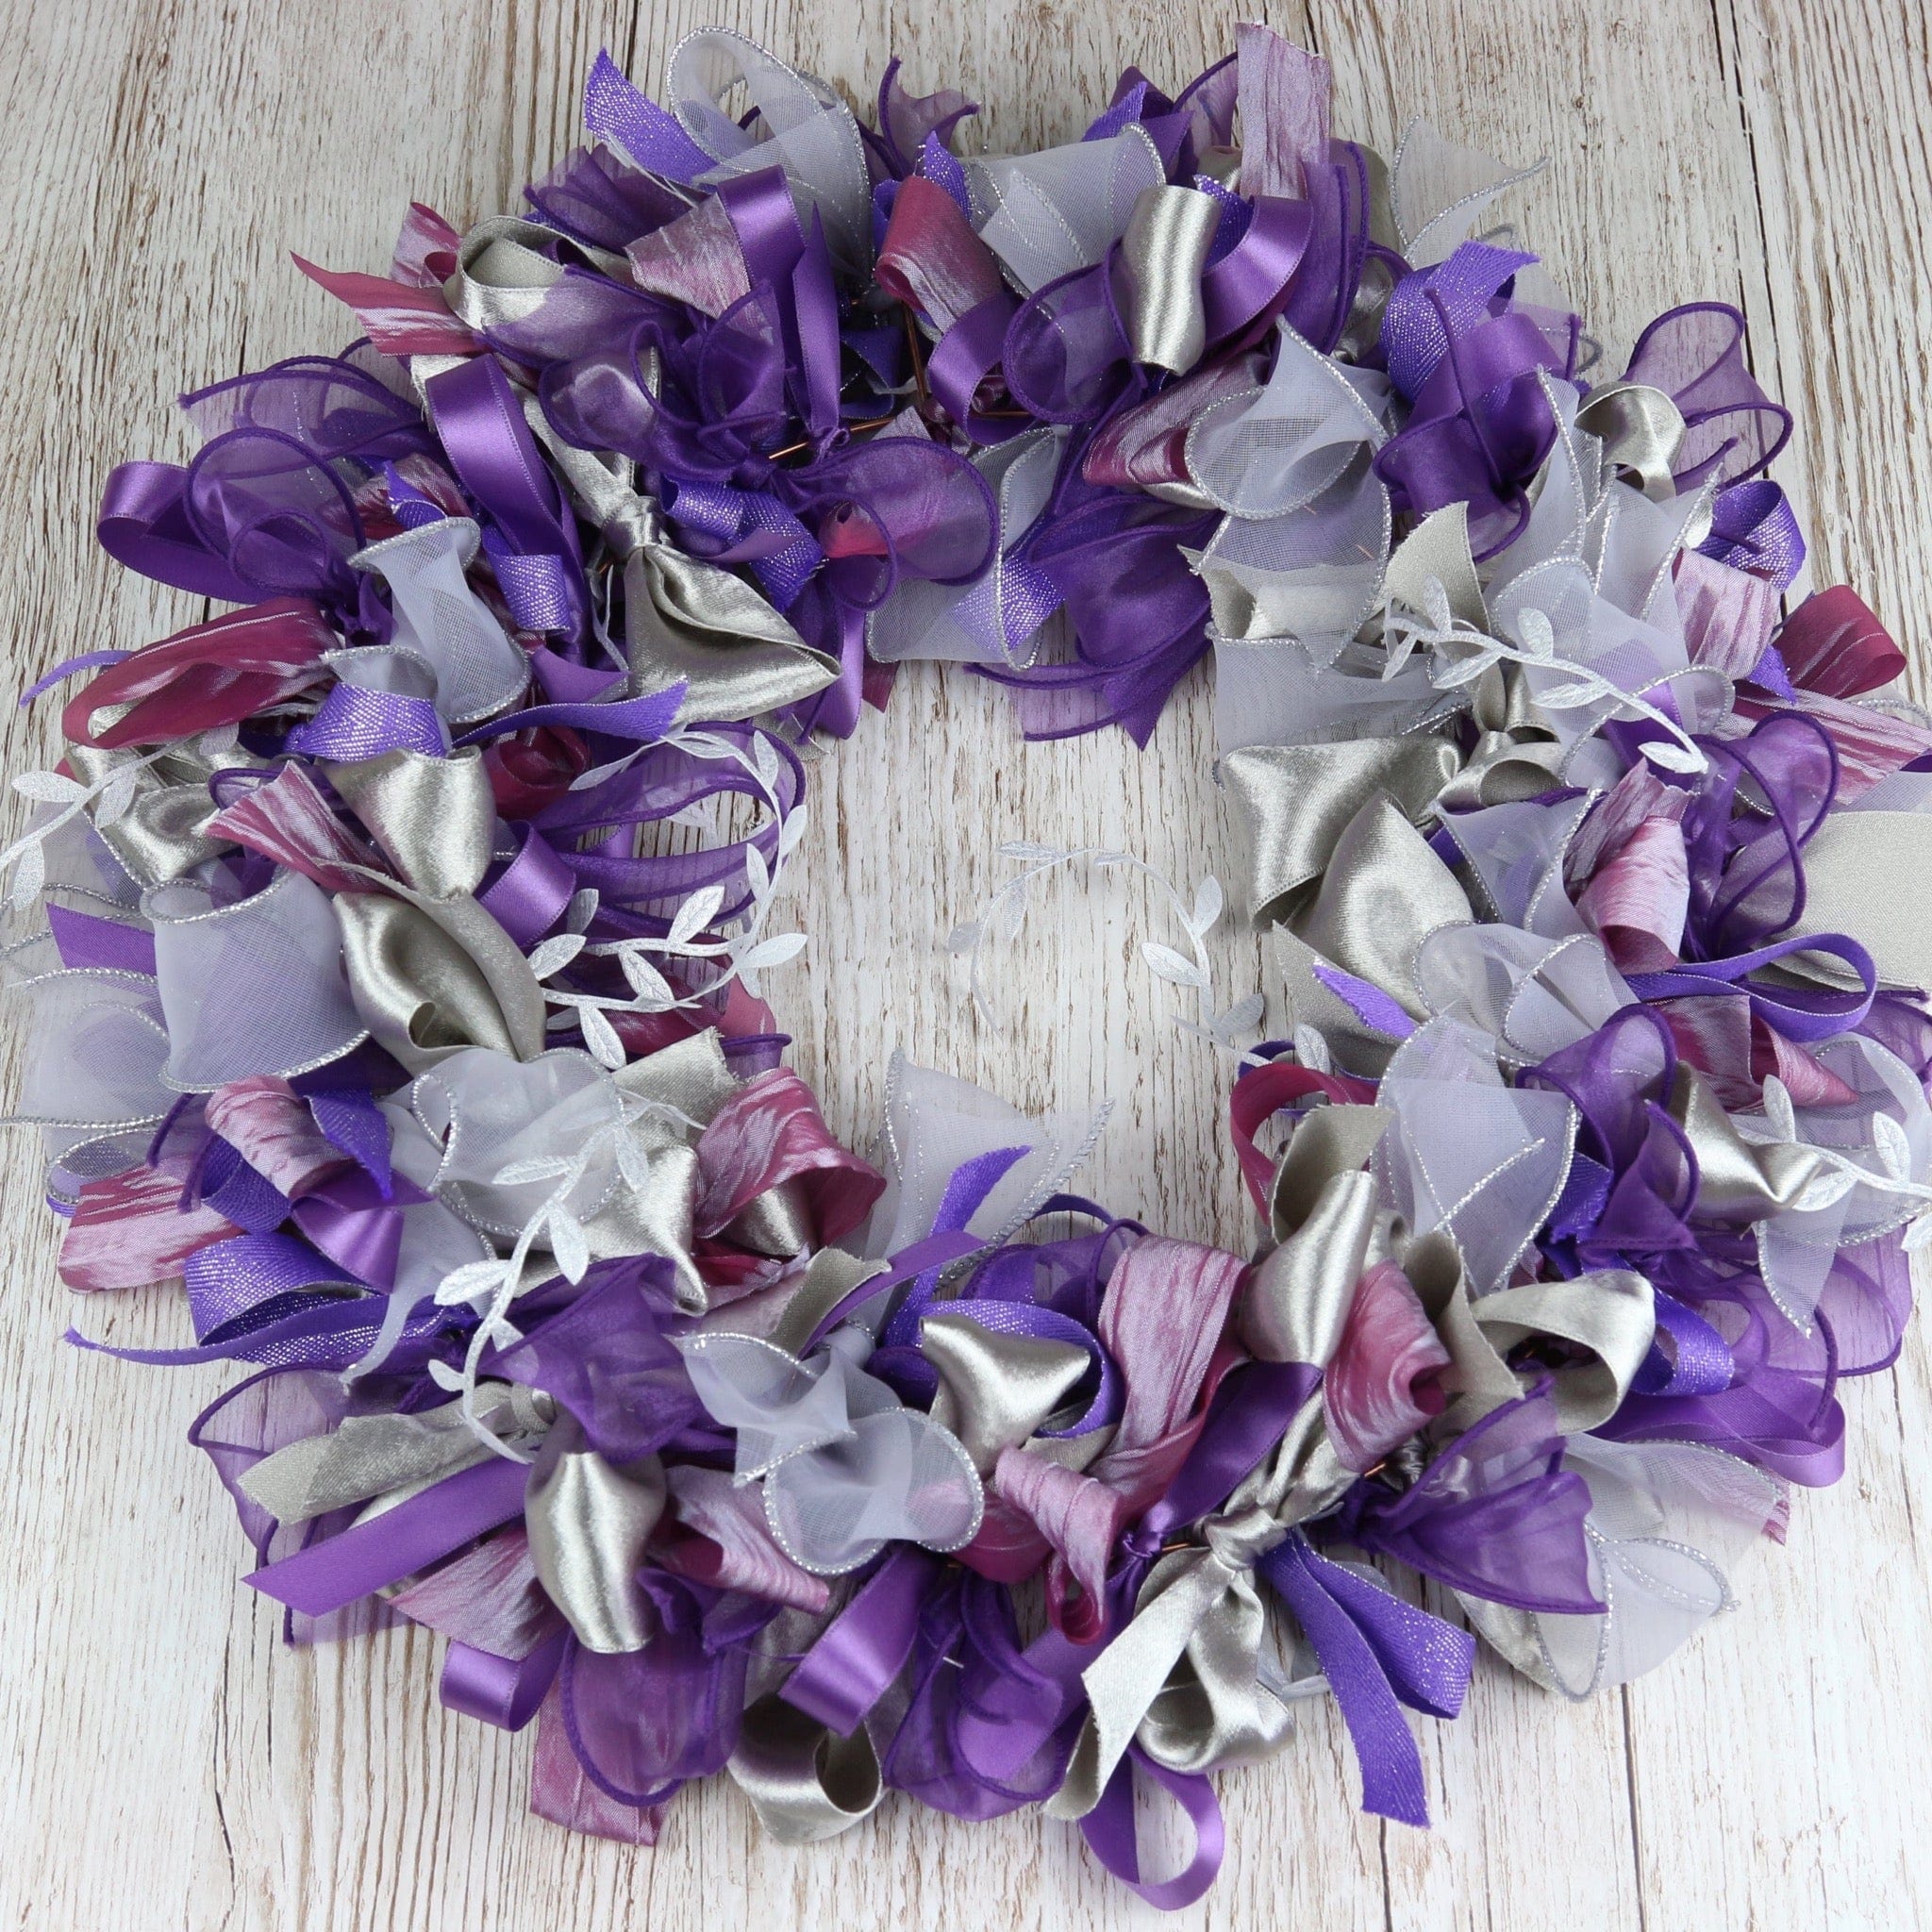 Ribbonly Kits Iris Ribbon Wreath Kit